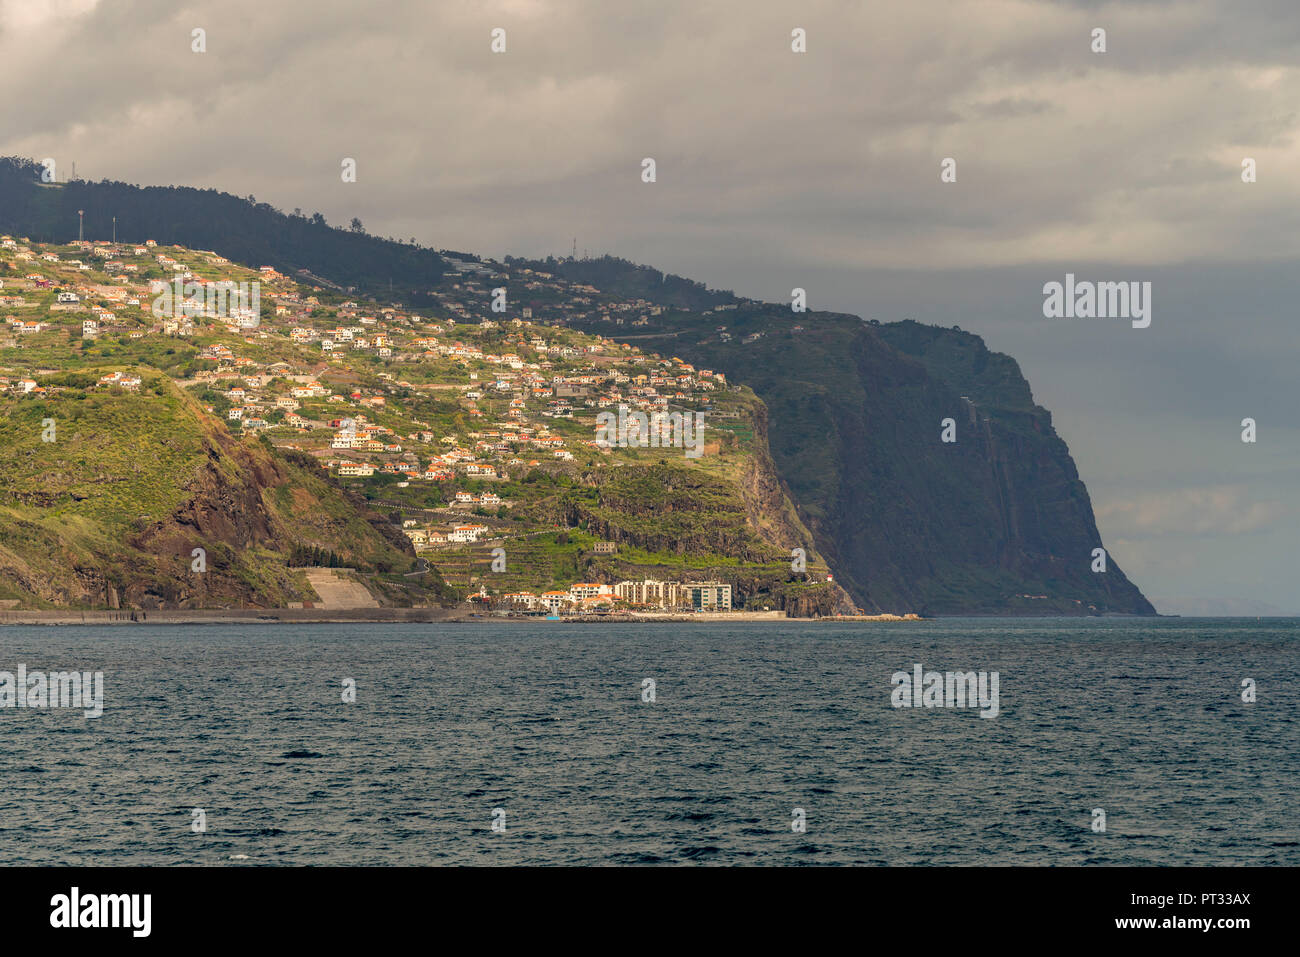 The town of Ribeira Brava shot from Ponta do Sol, Madeira region, Portugal, Stock Photo